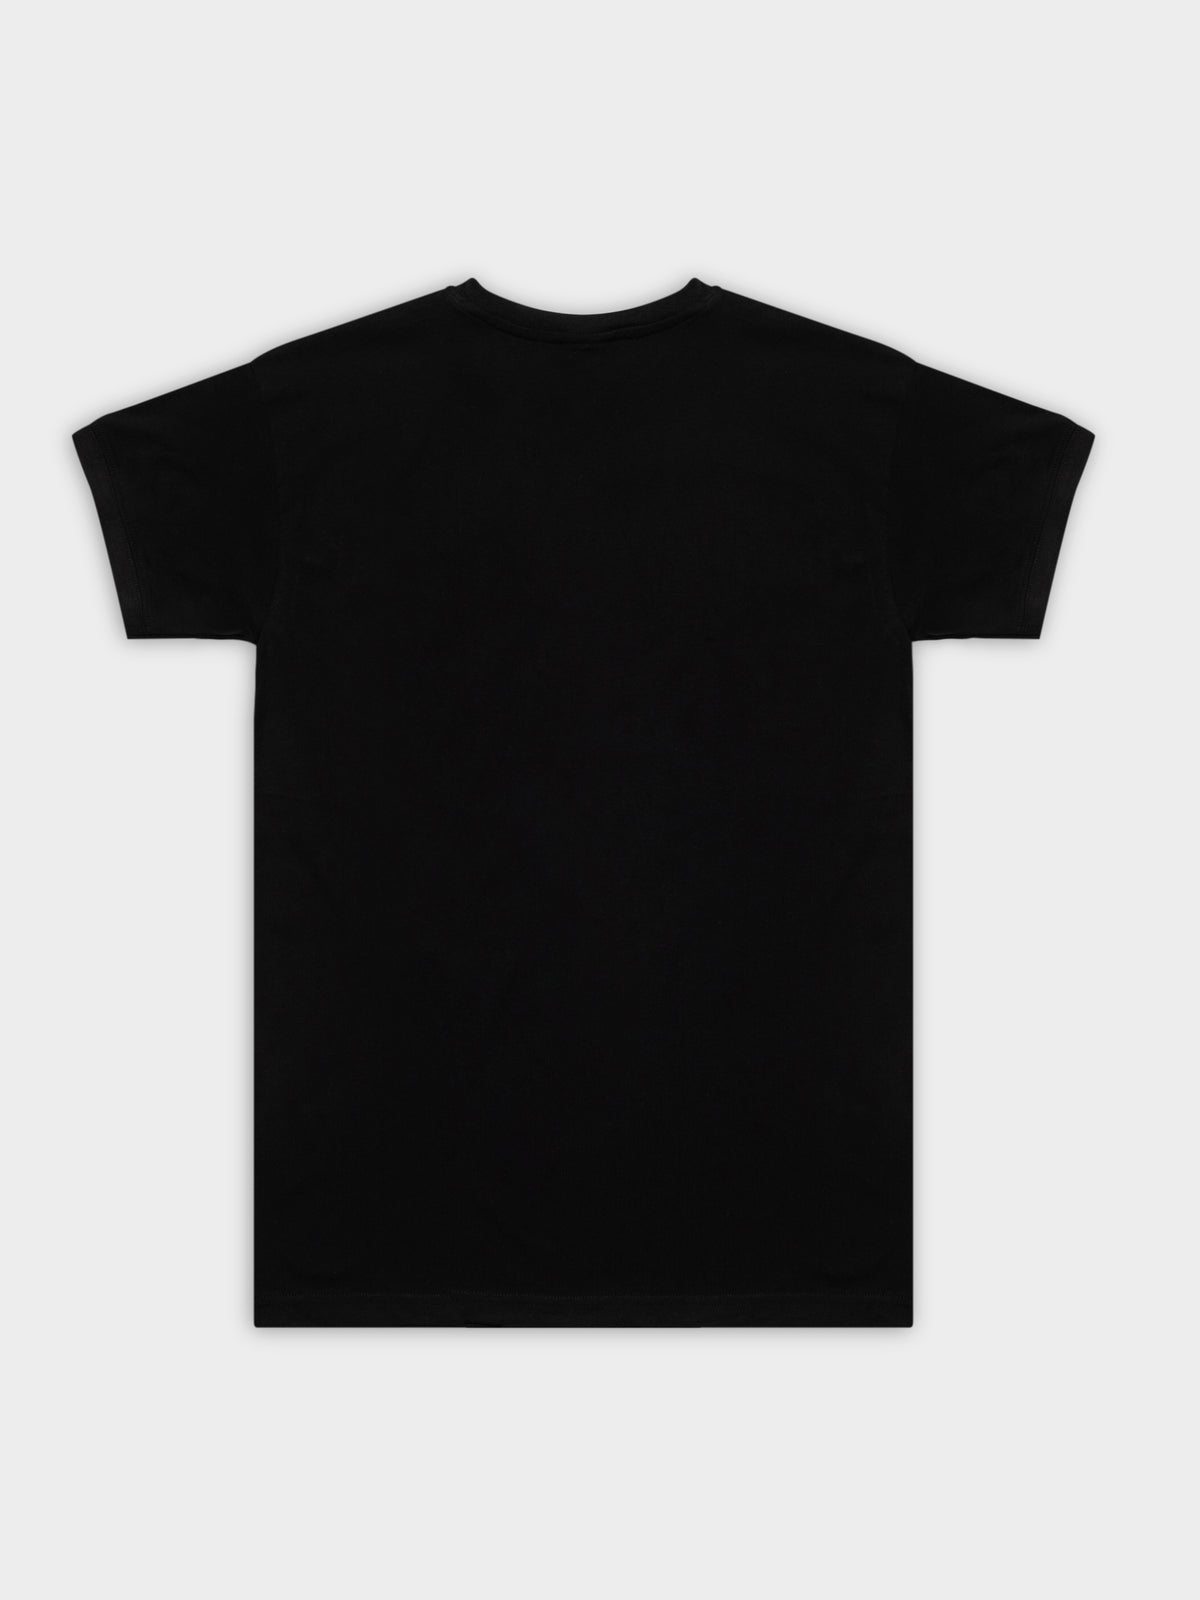 Changling T-Shirt in Black